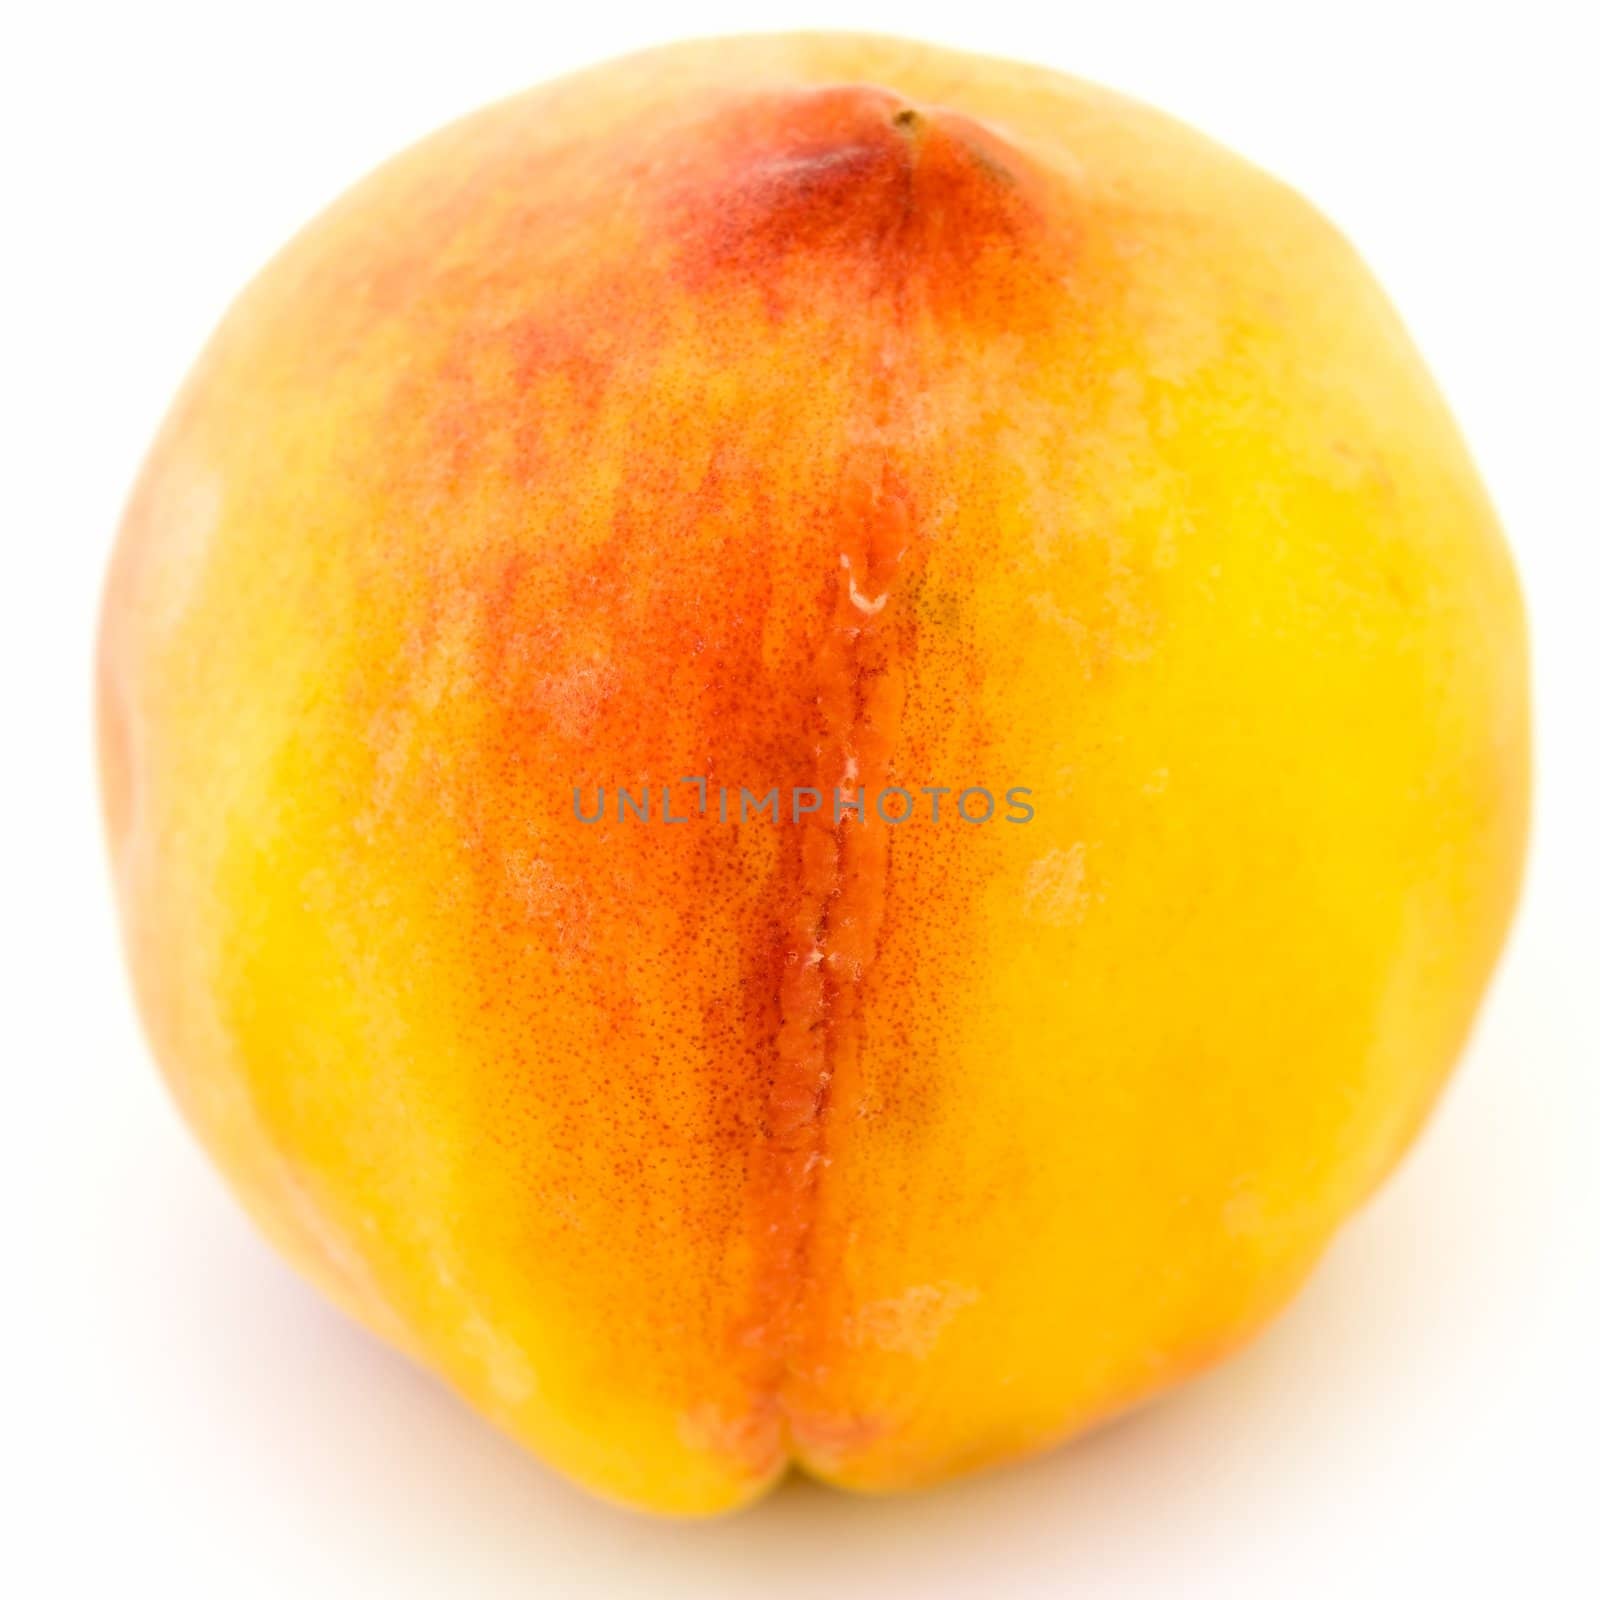 Big ripe peach on a white background